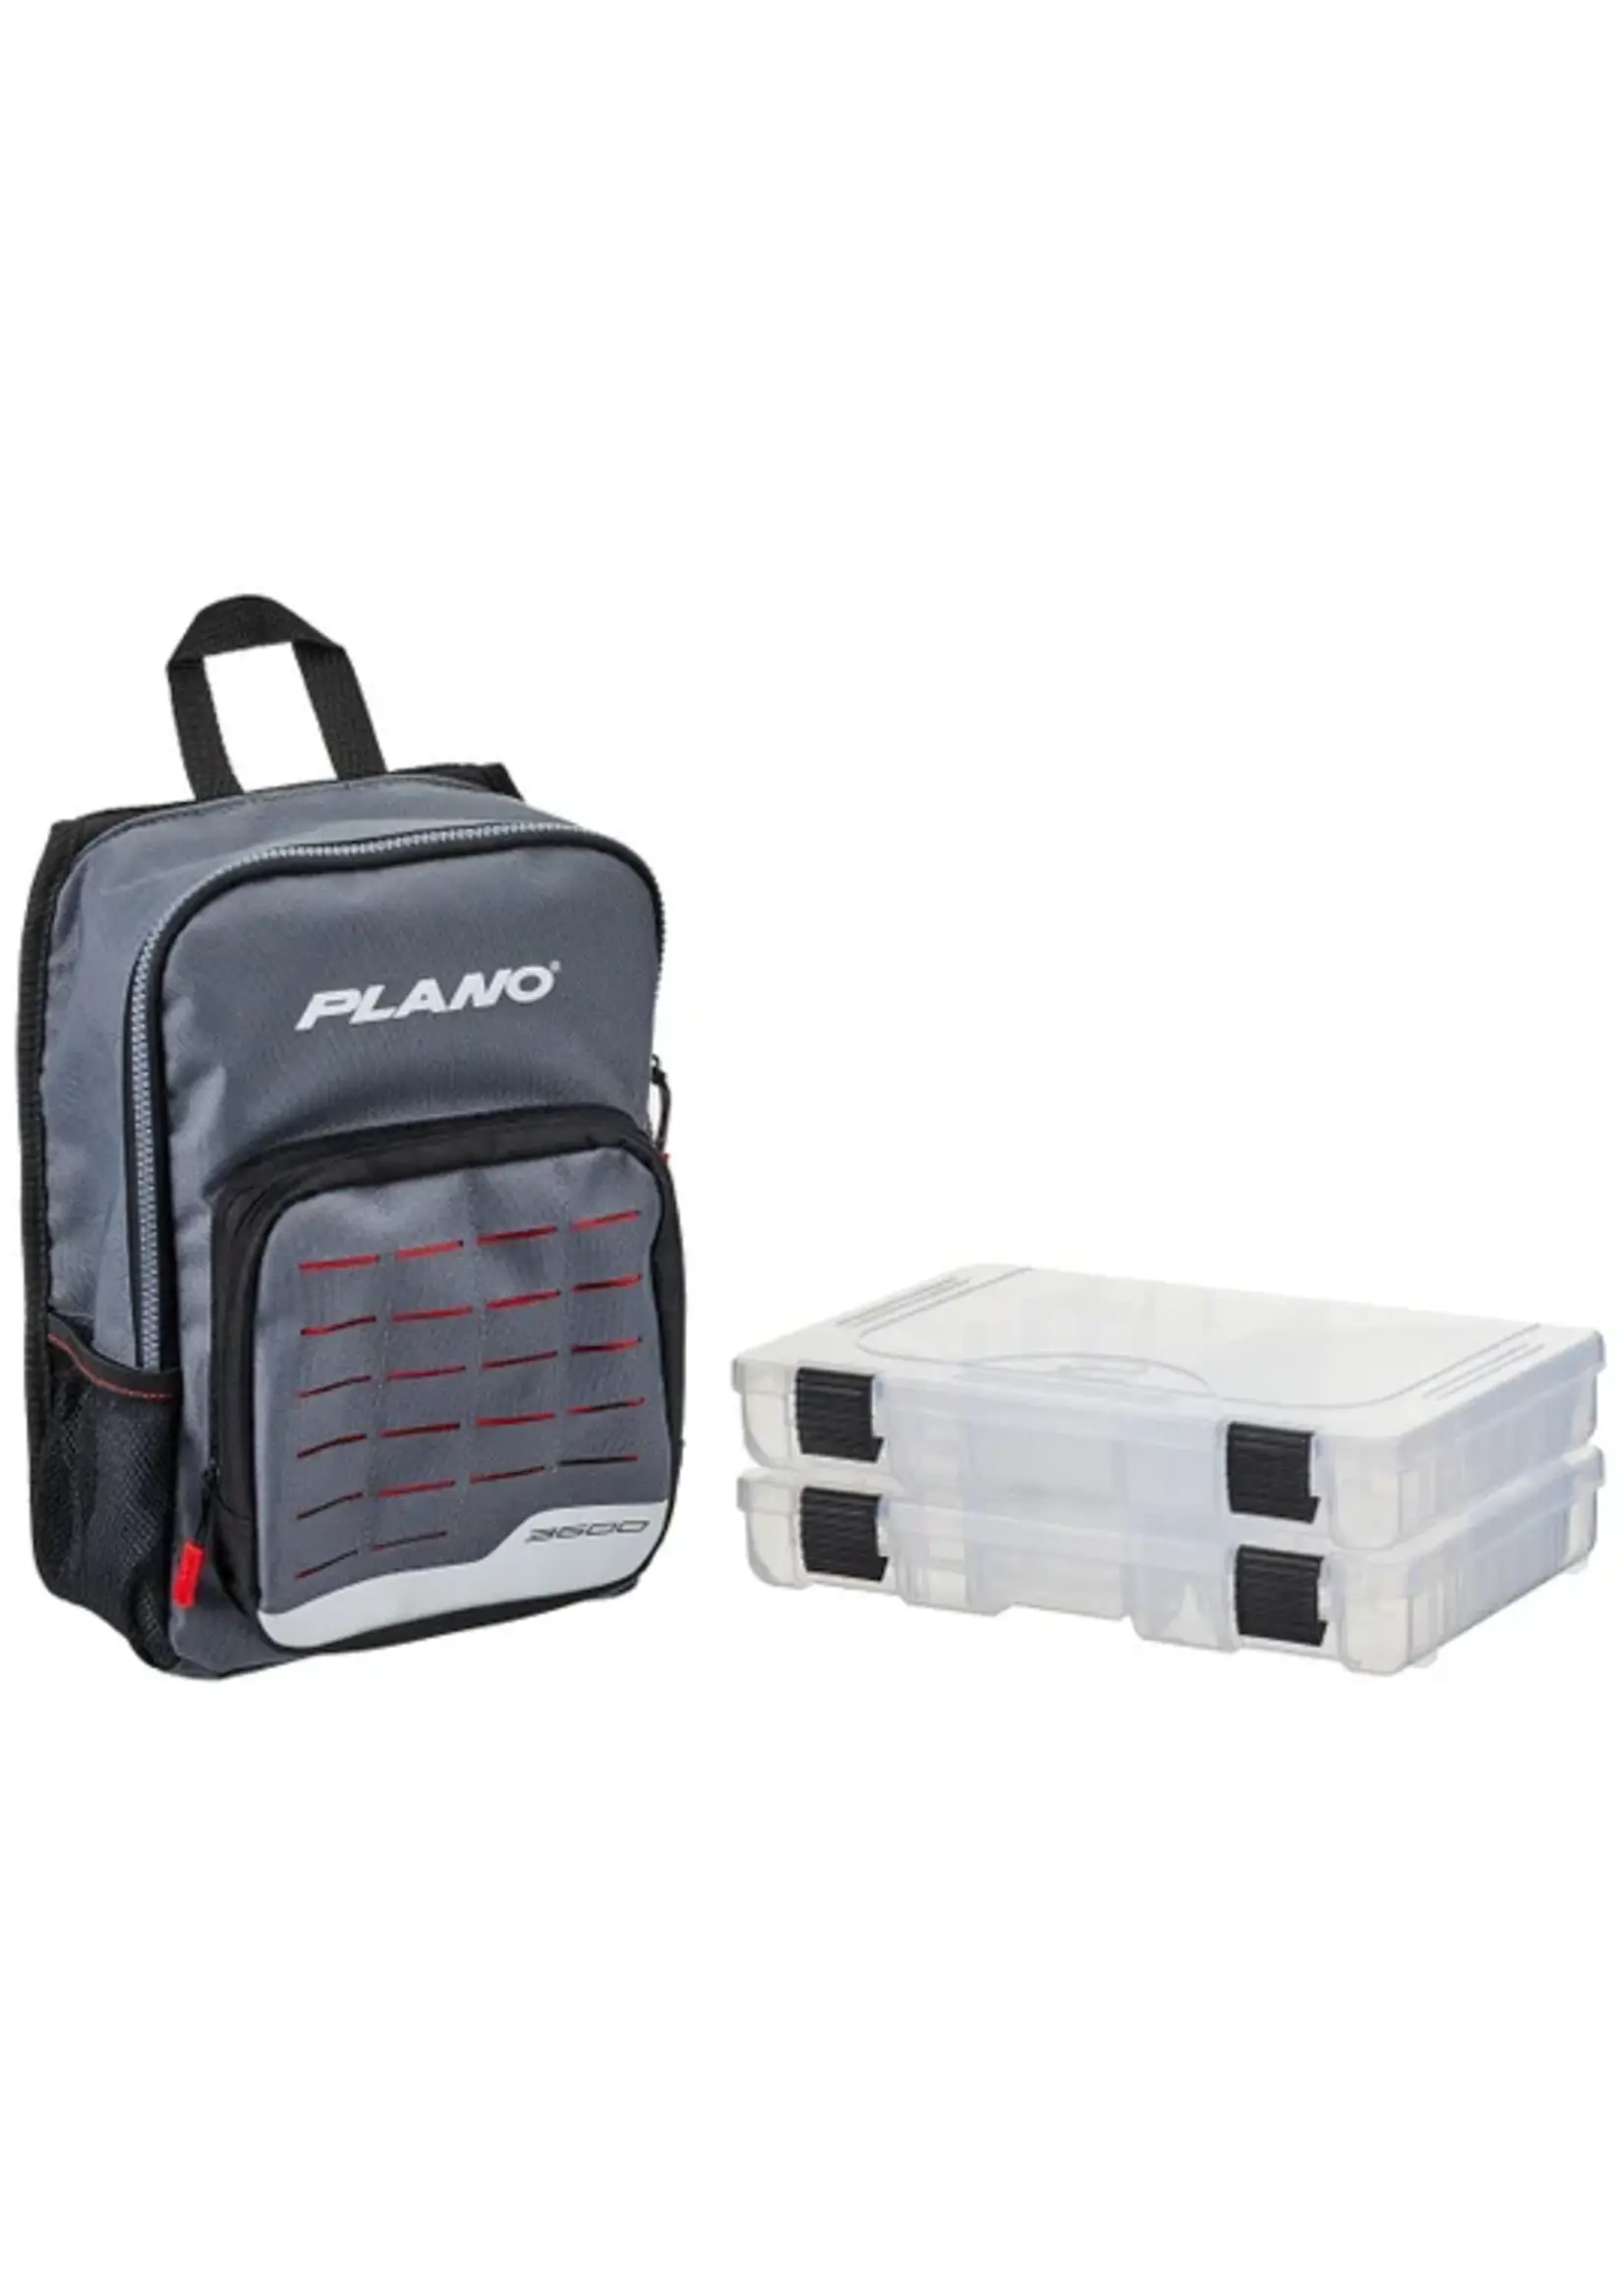  Plano Weekend Series 3600 Tackle Sling Pack, Gray